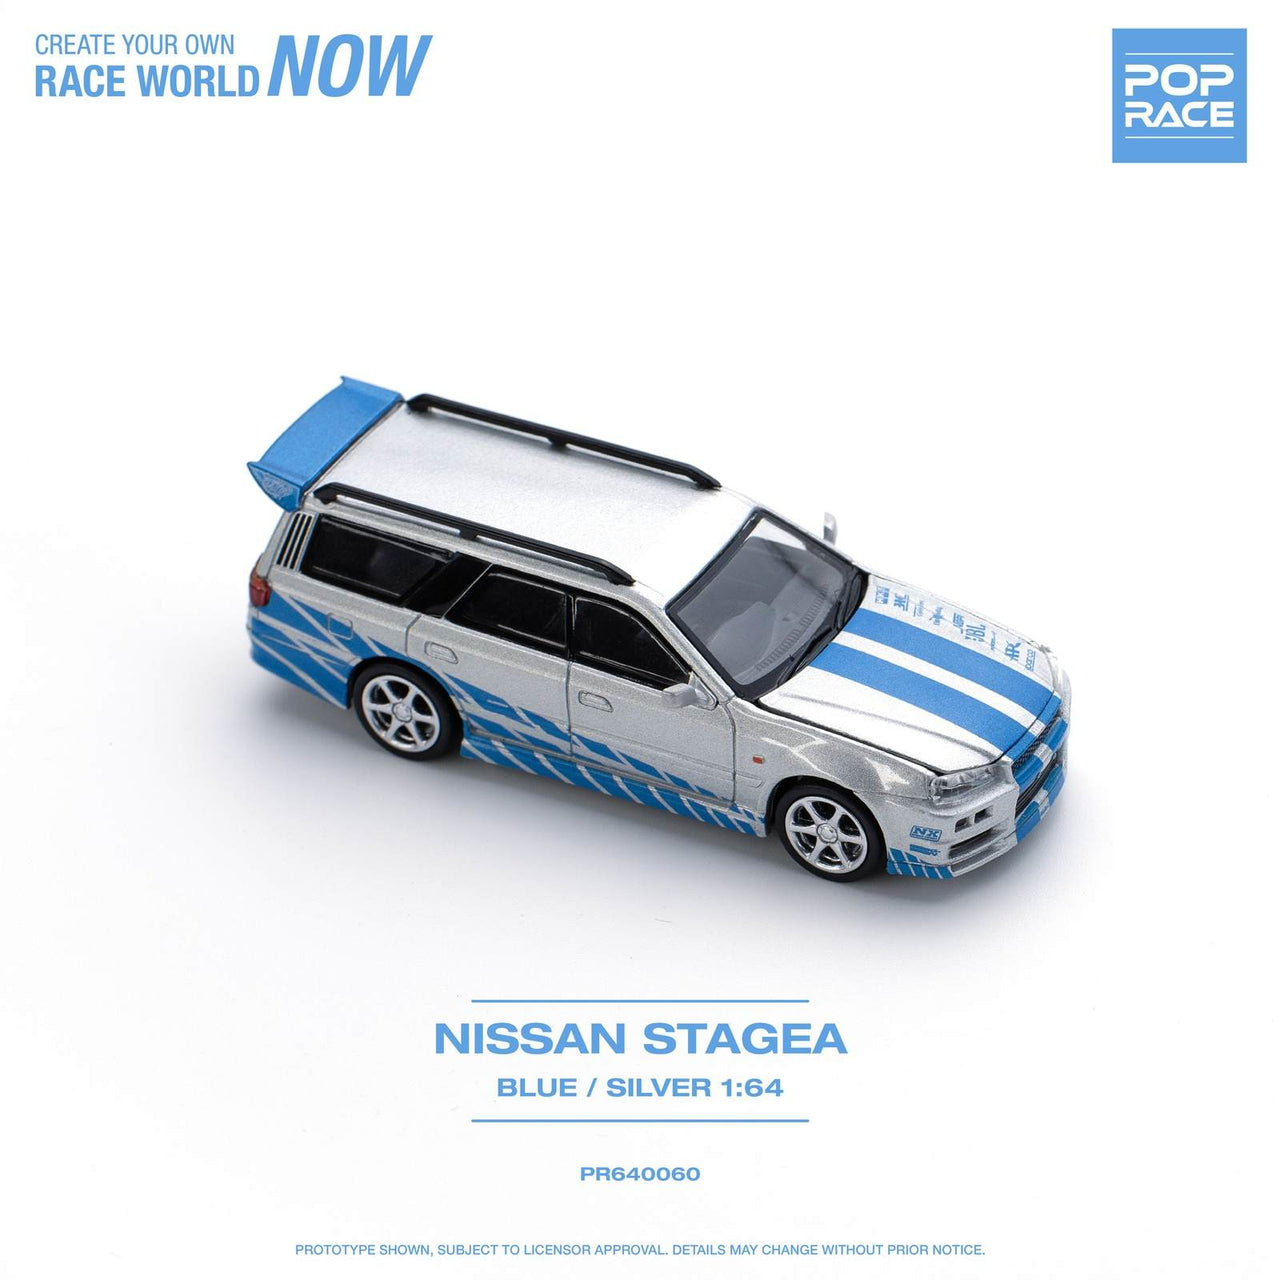 Pop Race 1:64 Nissan Stagea Fast & Furious Blue/Silver